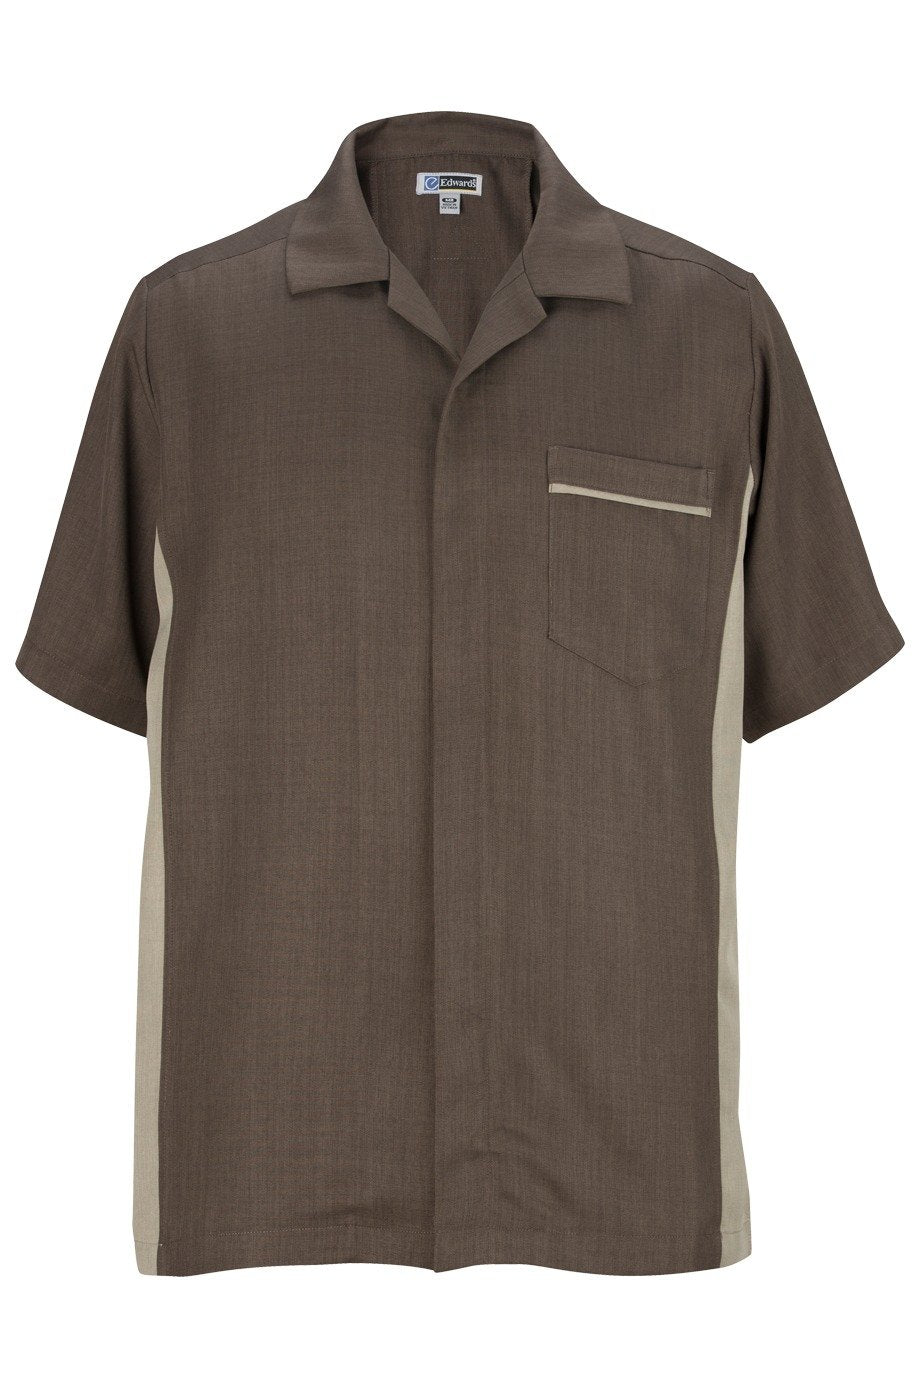 edwards-garment-mens-service-shirts-tunics